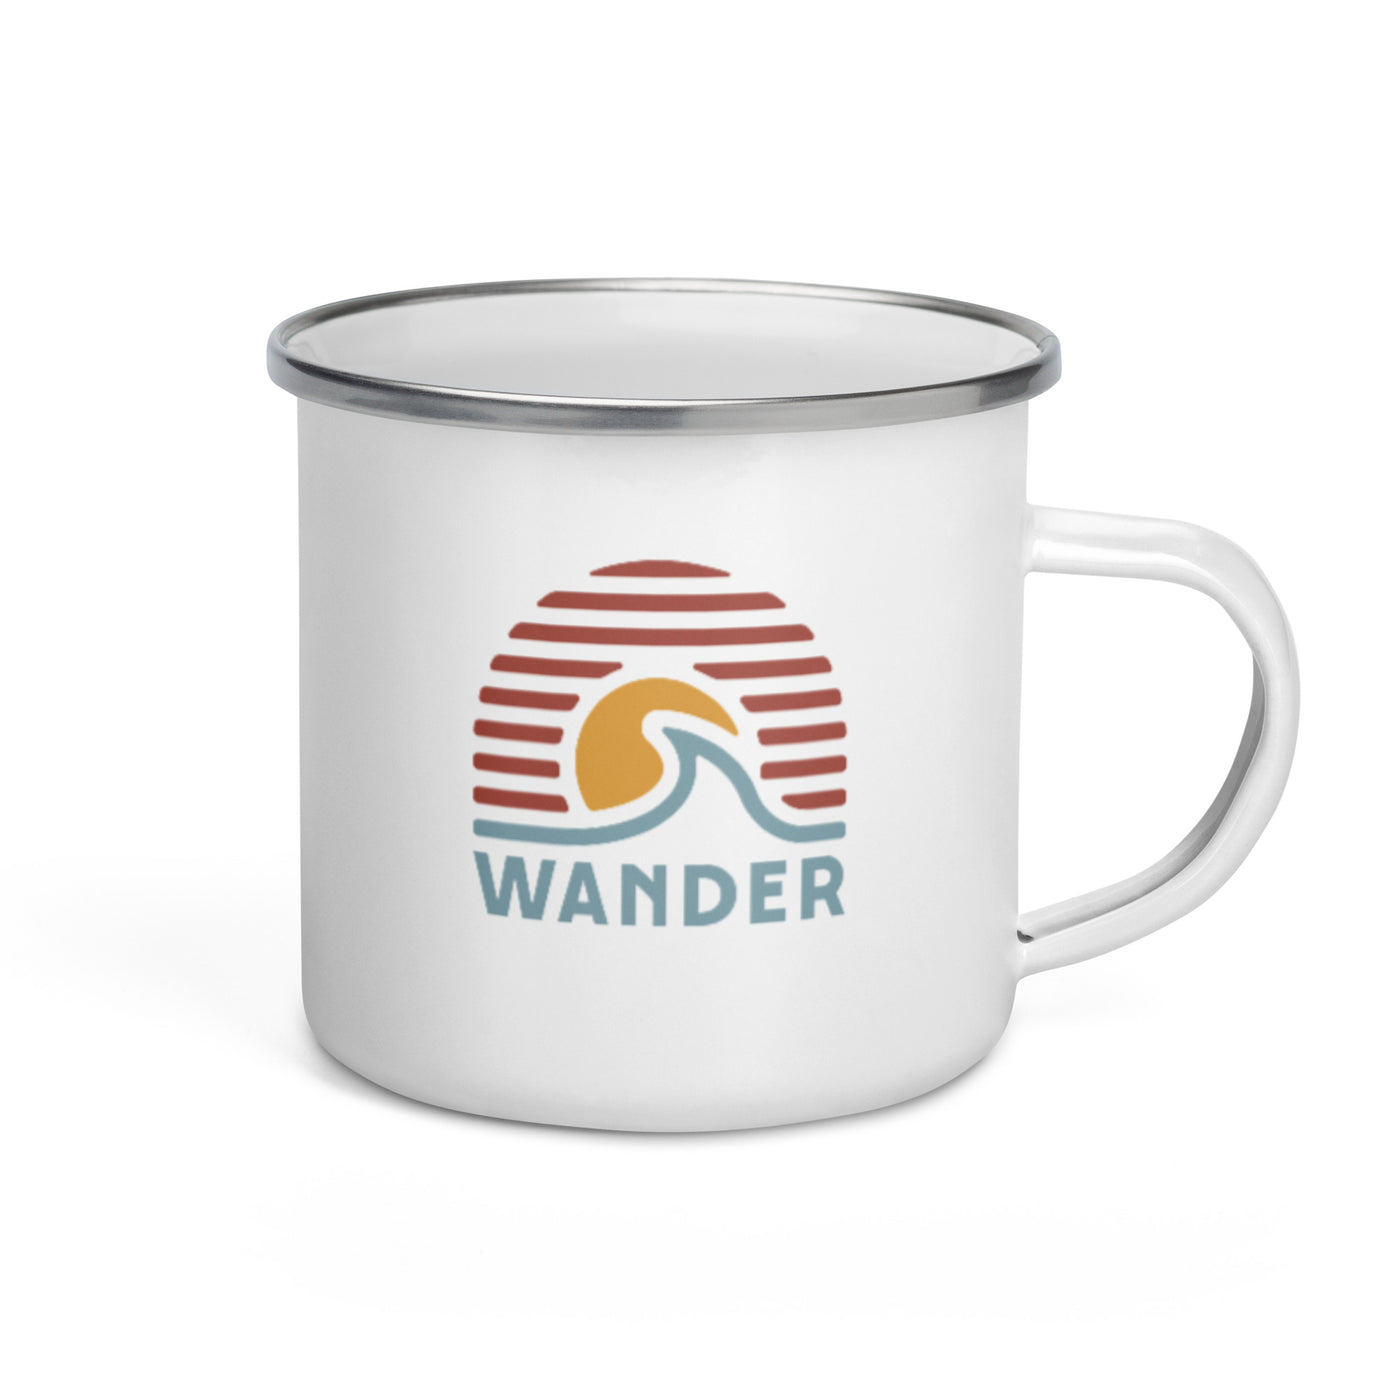 Wander the seas - Enamel Mug